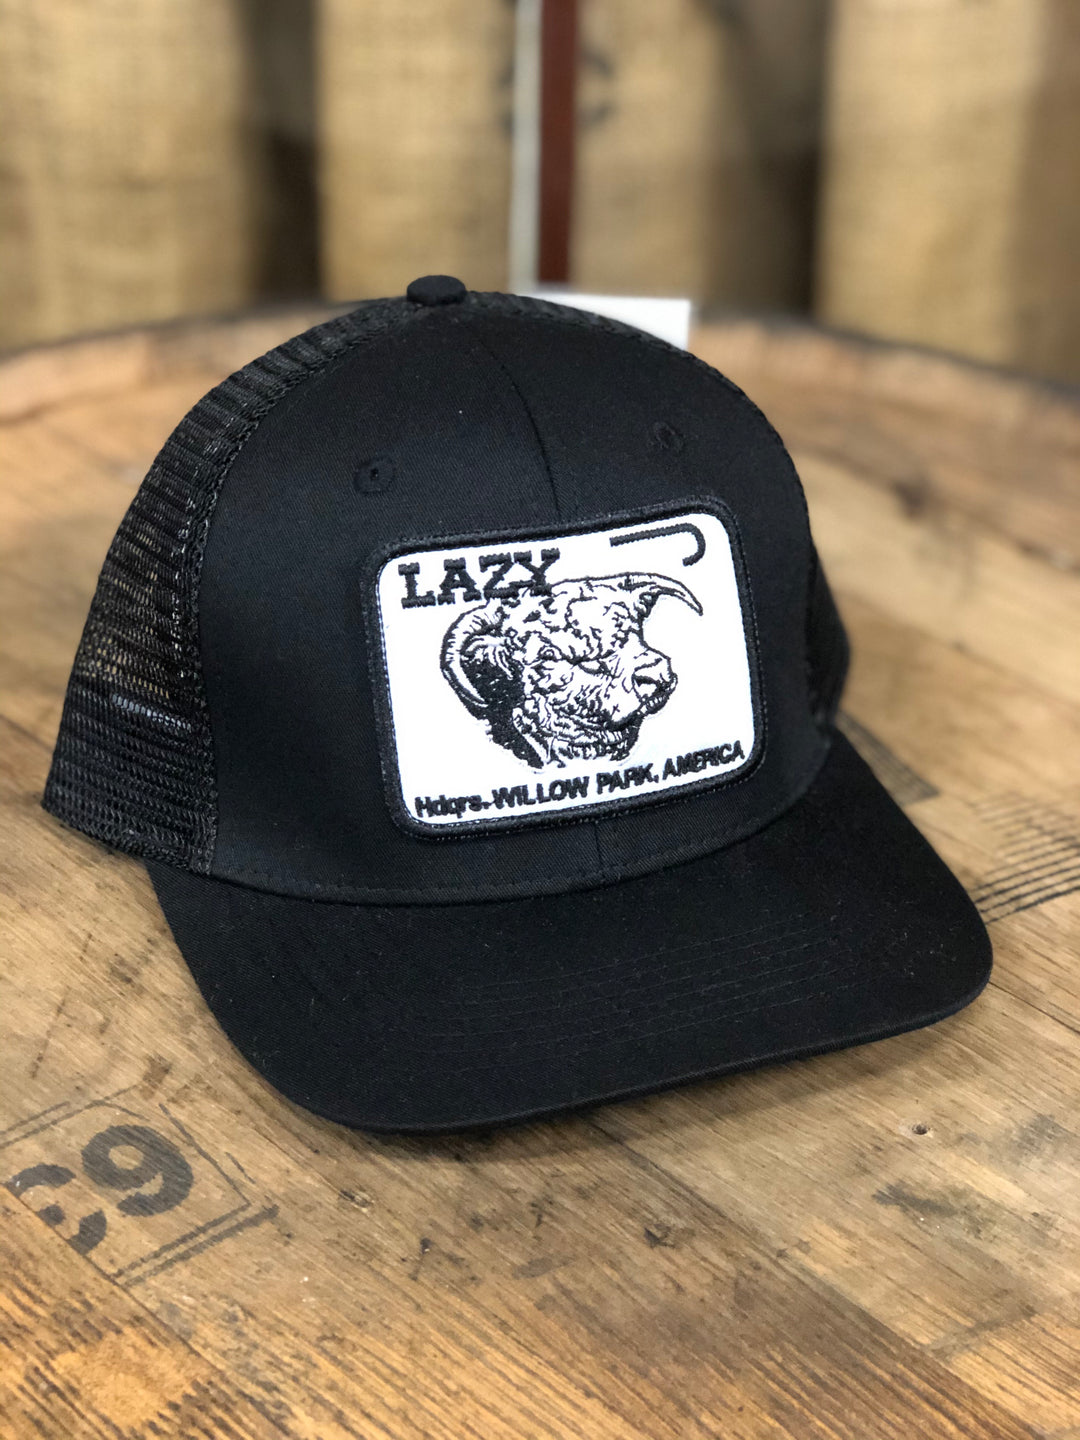 Lazy J Ranch Wear Black & Black 3.5" Cattle Headquarters Patch Cap